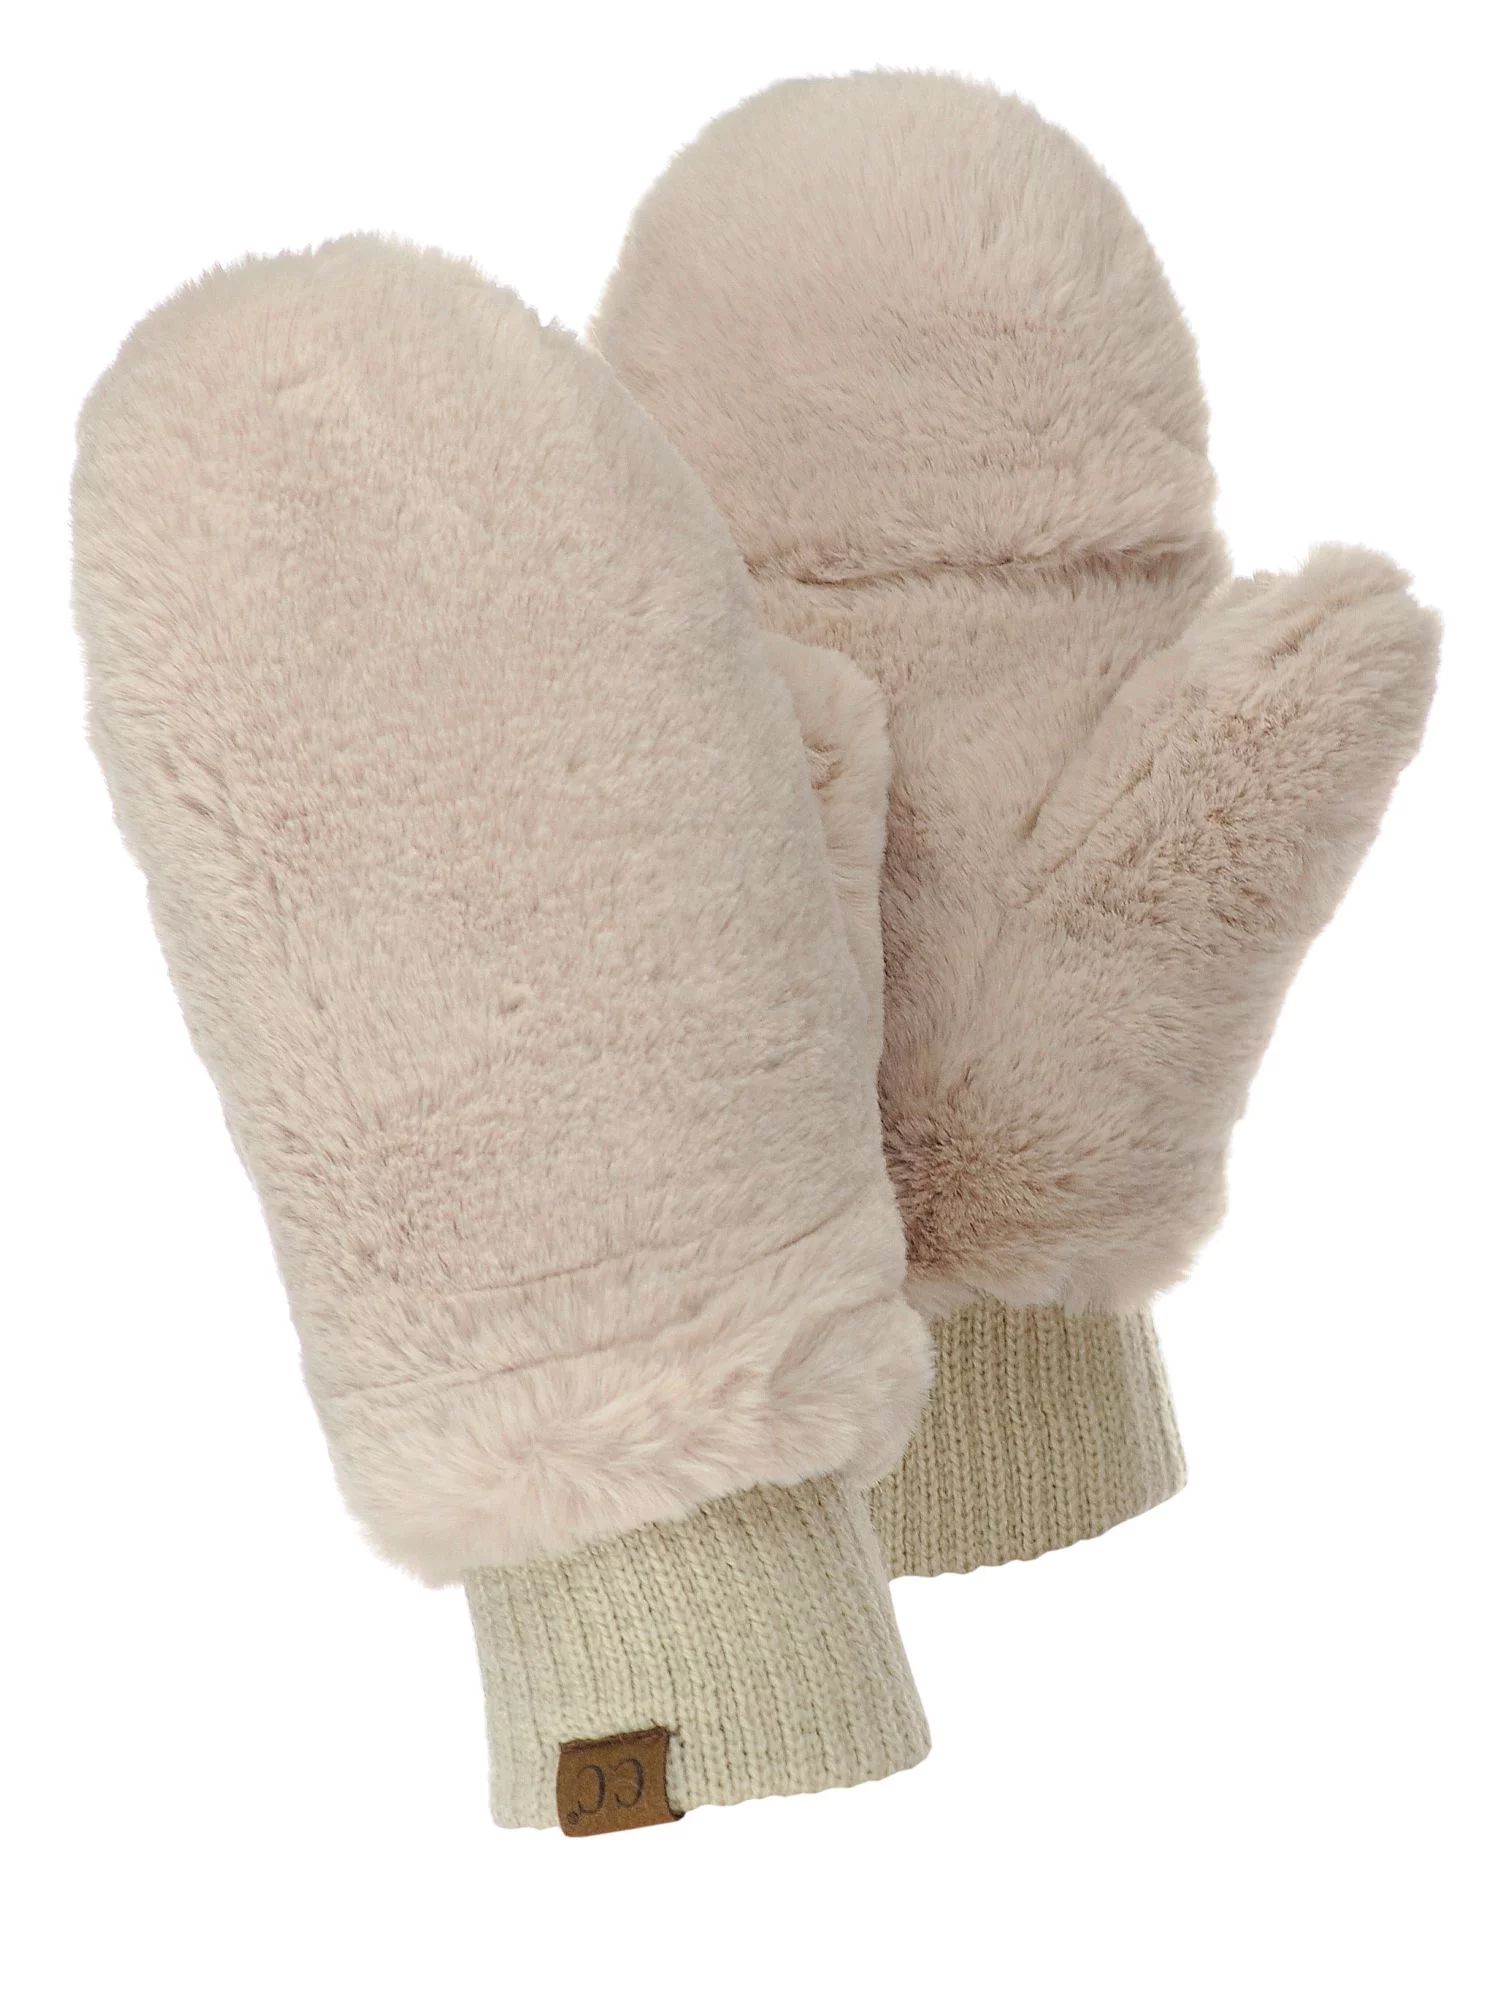 C.C Women's Faux Fur Wrist Length Fingerless Sherpa Lined Convertible Mittens Gloves, Beige | Walmart (US)